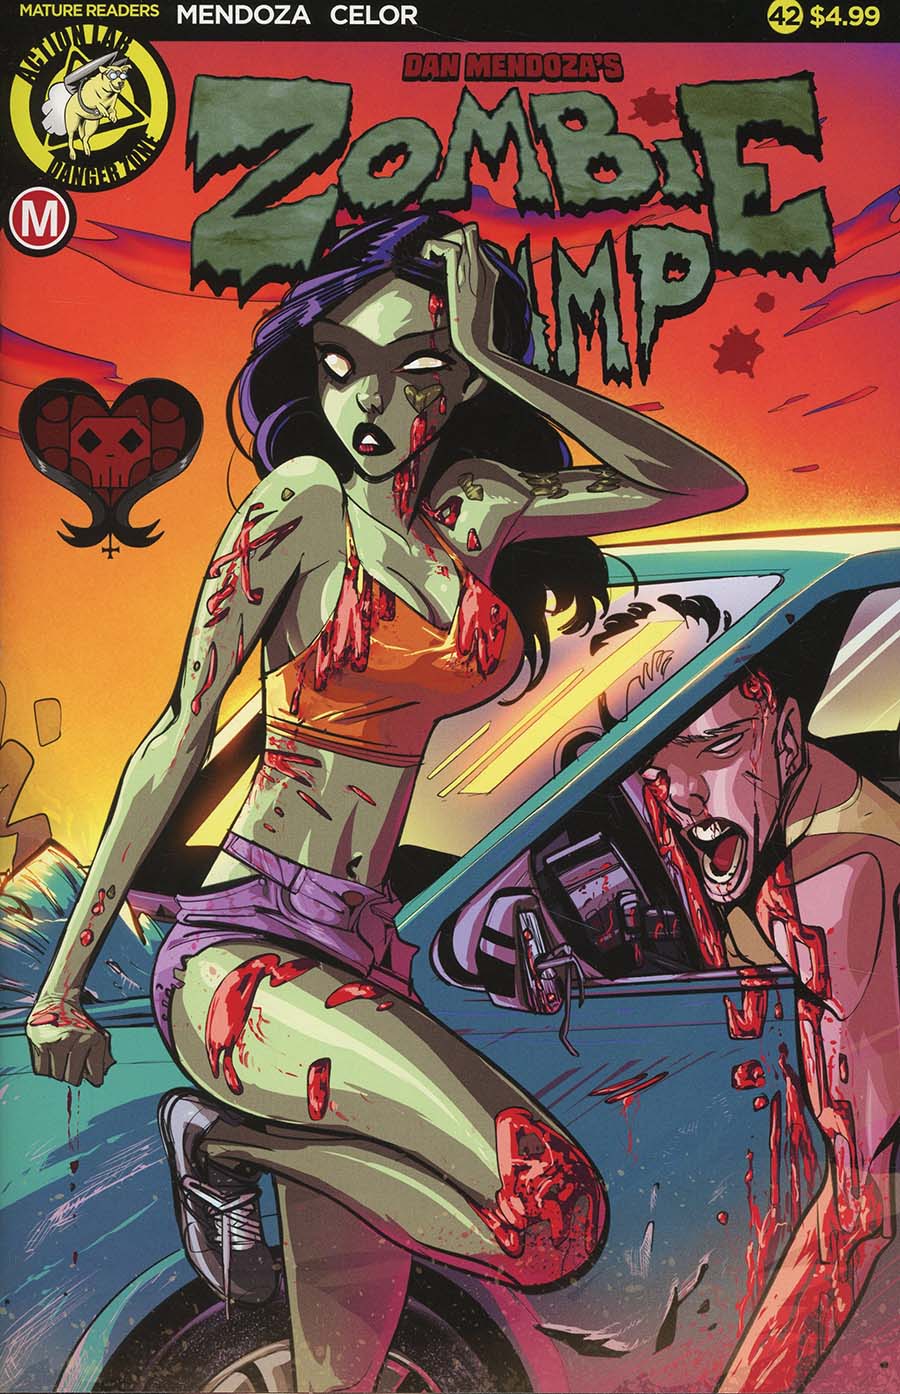 Zombie Tramp Vol 2 #42 Cover A Regular Celor Cover